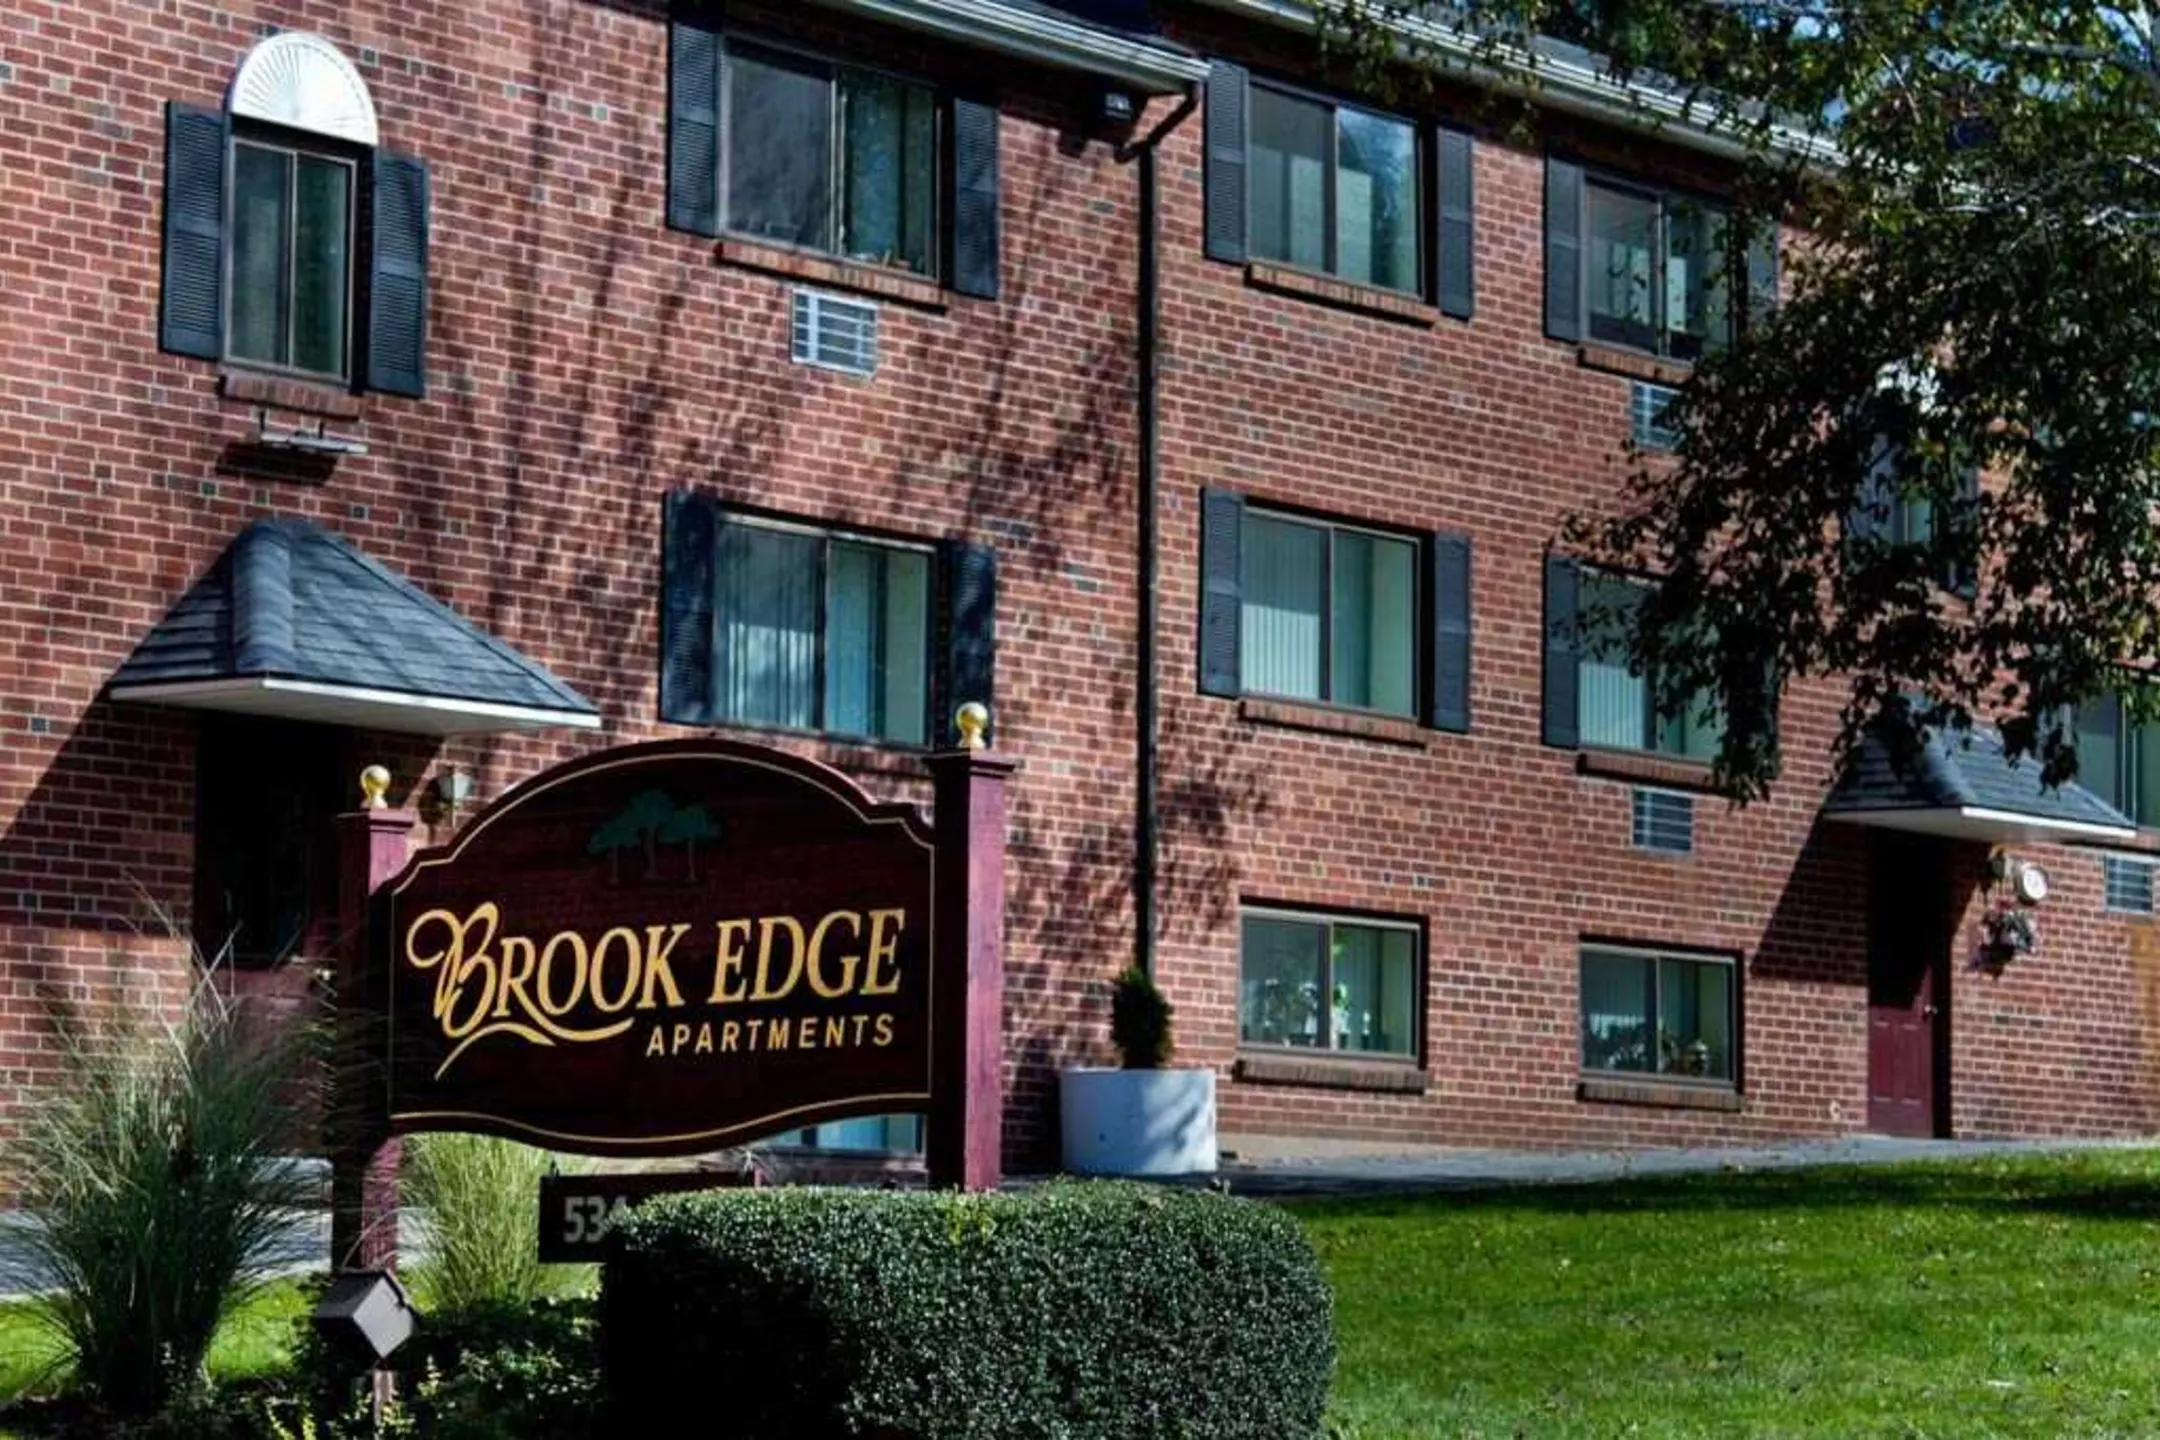 Building - Brook Edge Apartments - Chicopee, MA